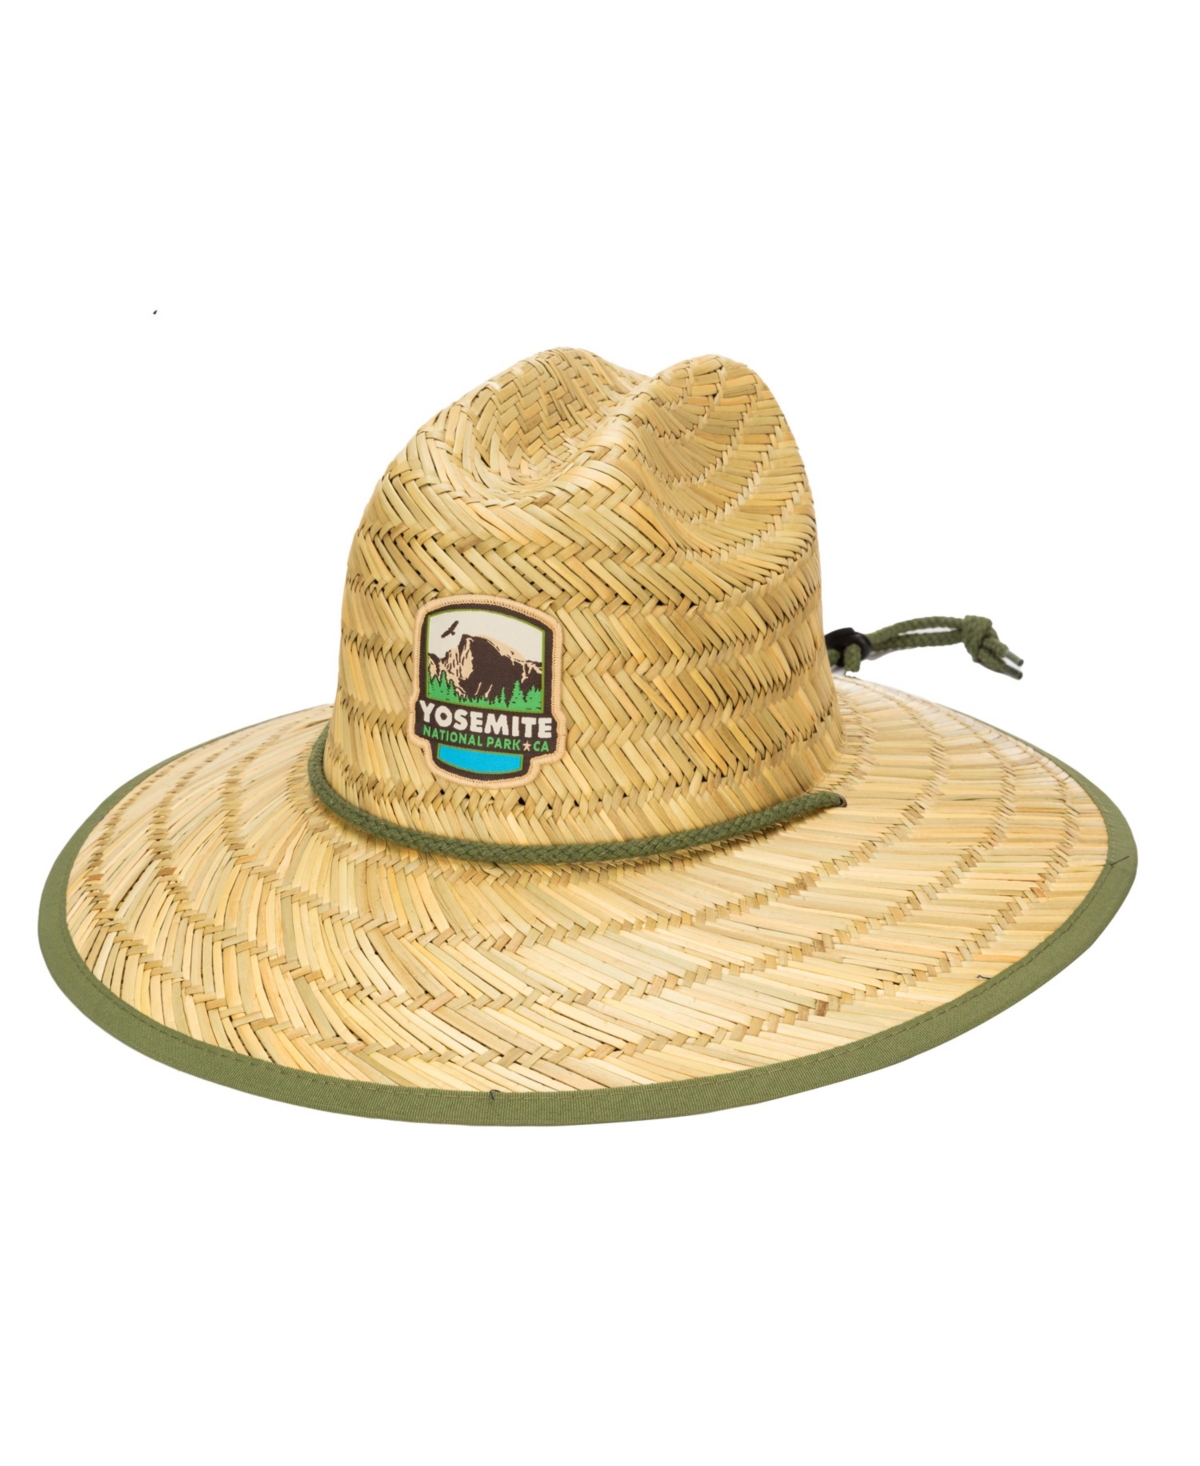 Men's Straw Lifeguard Sun Hat - Yosemite